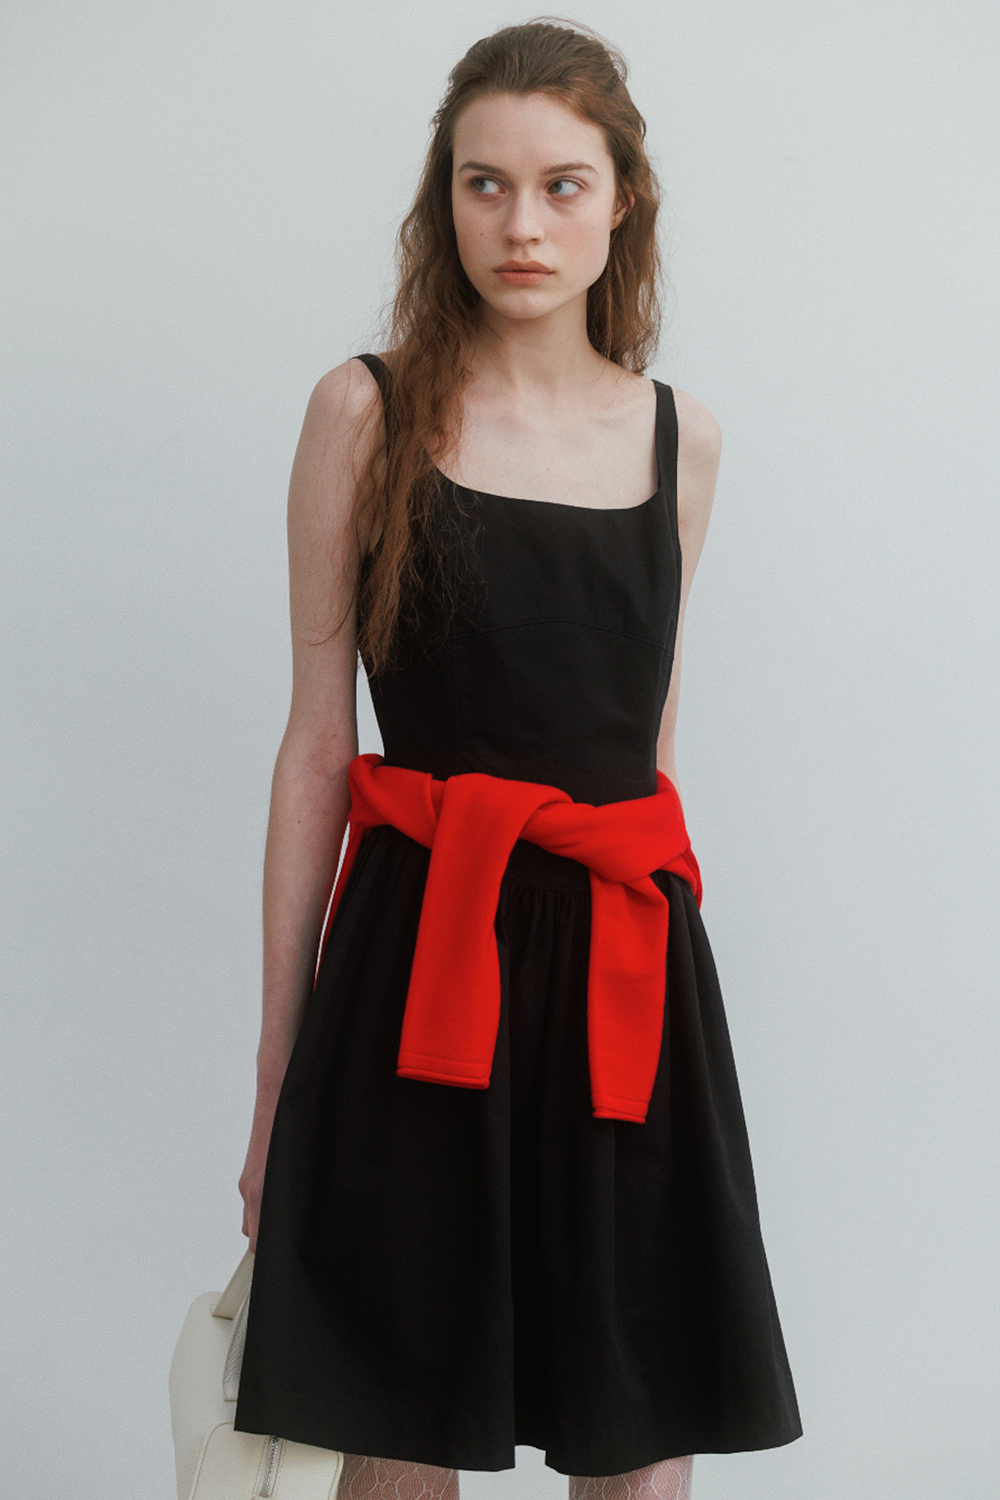 [REORDER] Saona Cotton Dress in Black (4/24일 예약배송)